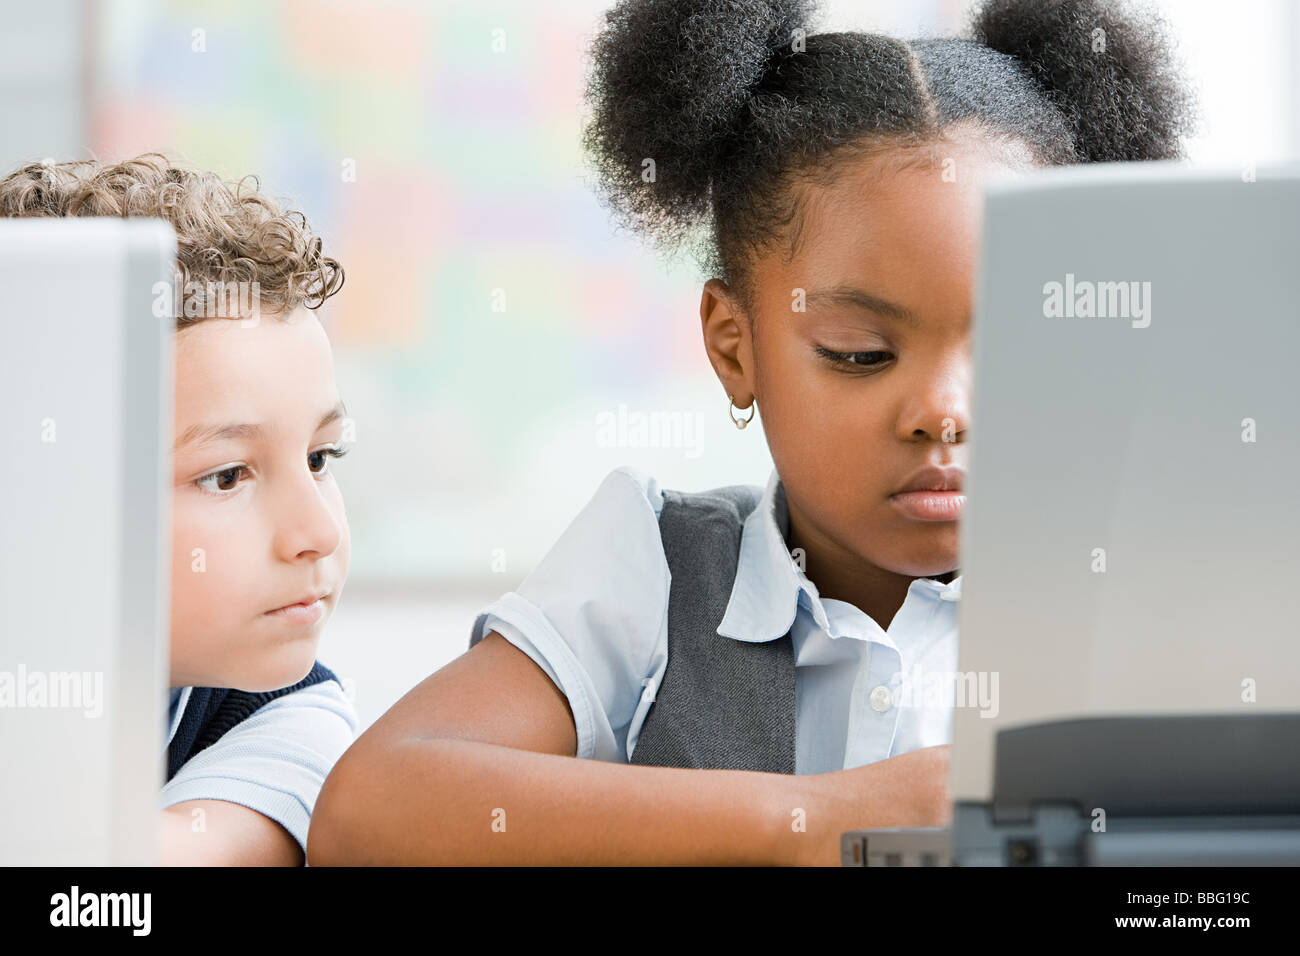 School children with laptop Stock Photo